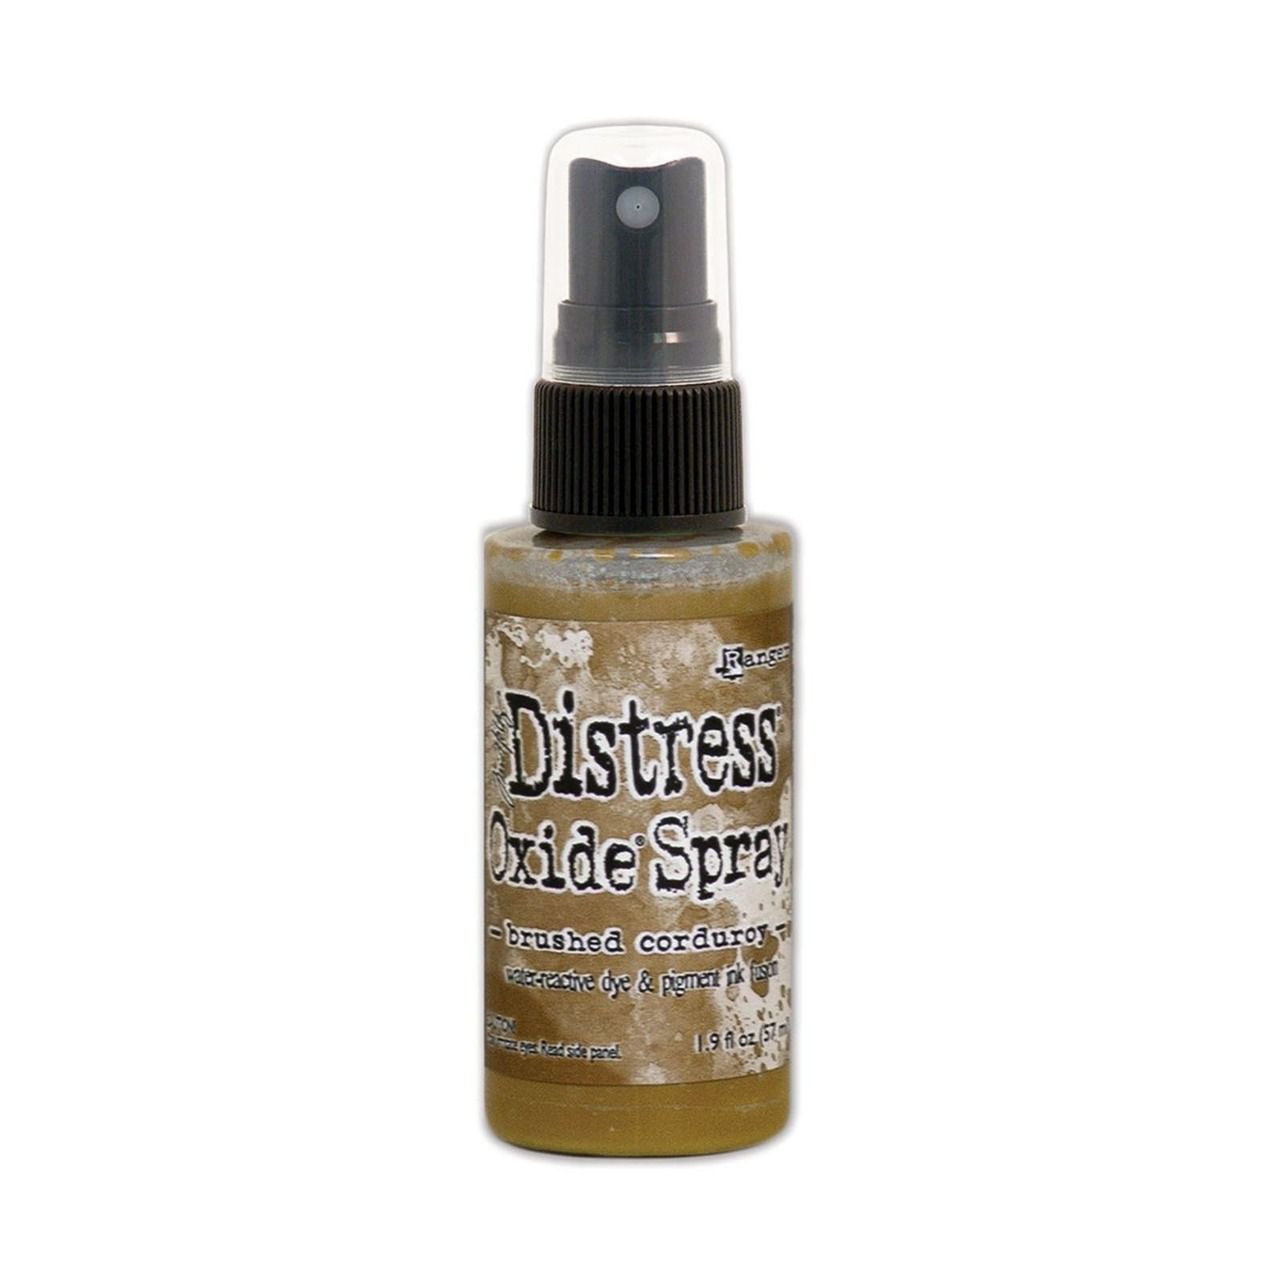 Distress spray oxide : Brushed corduroy